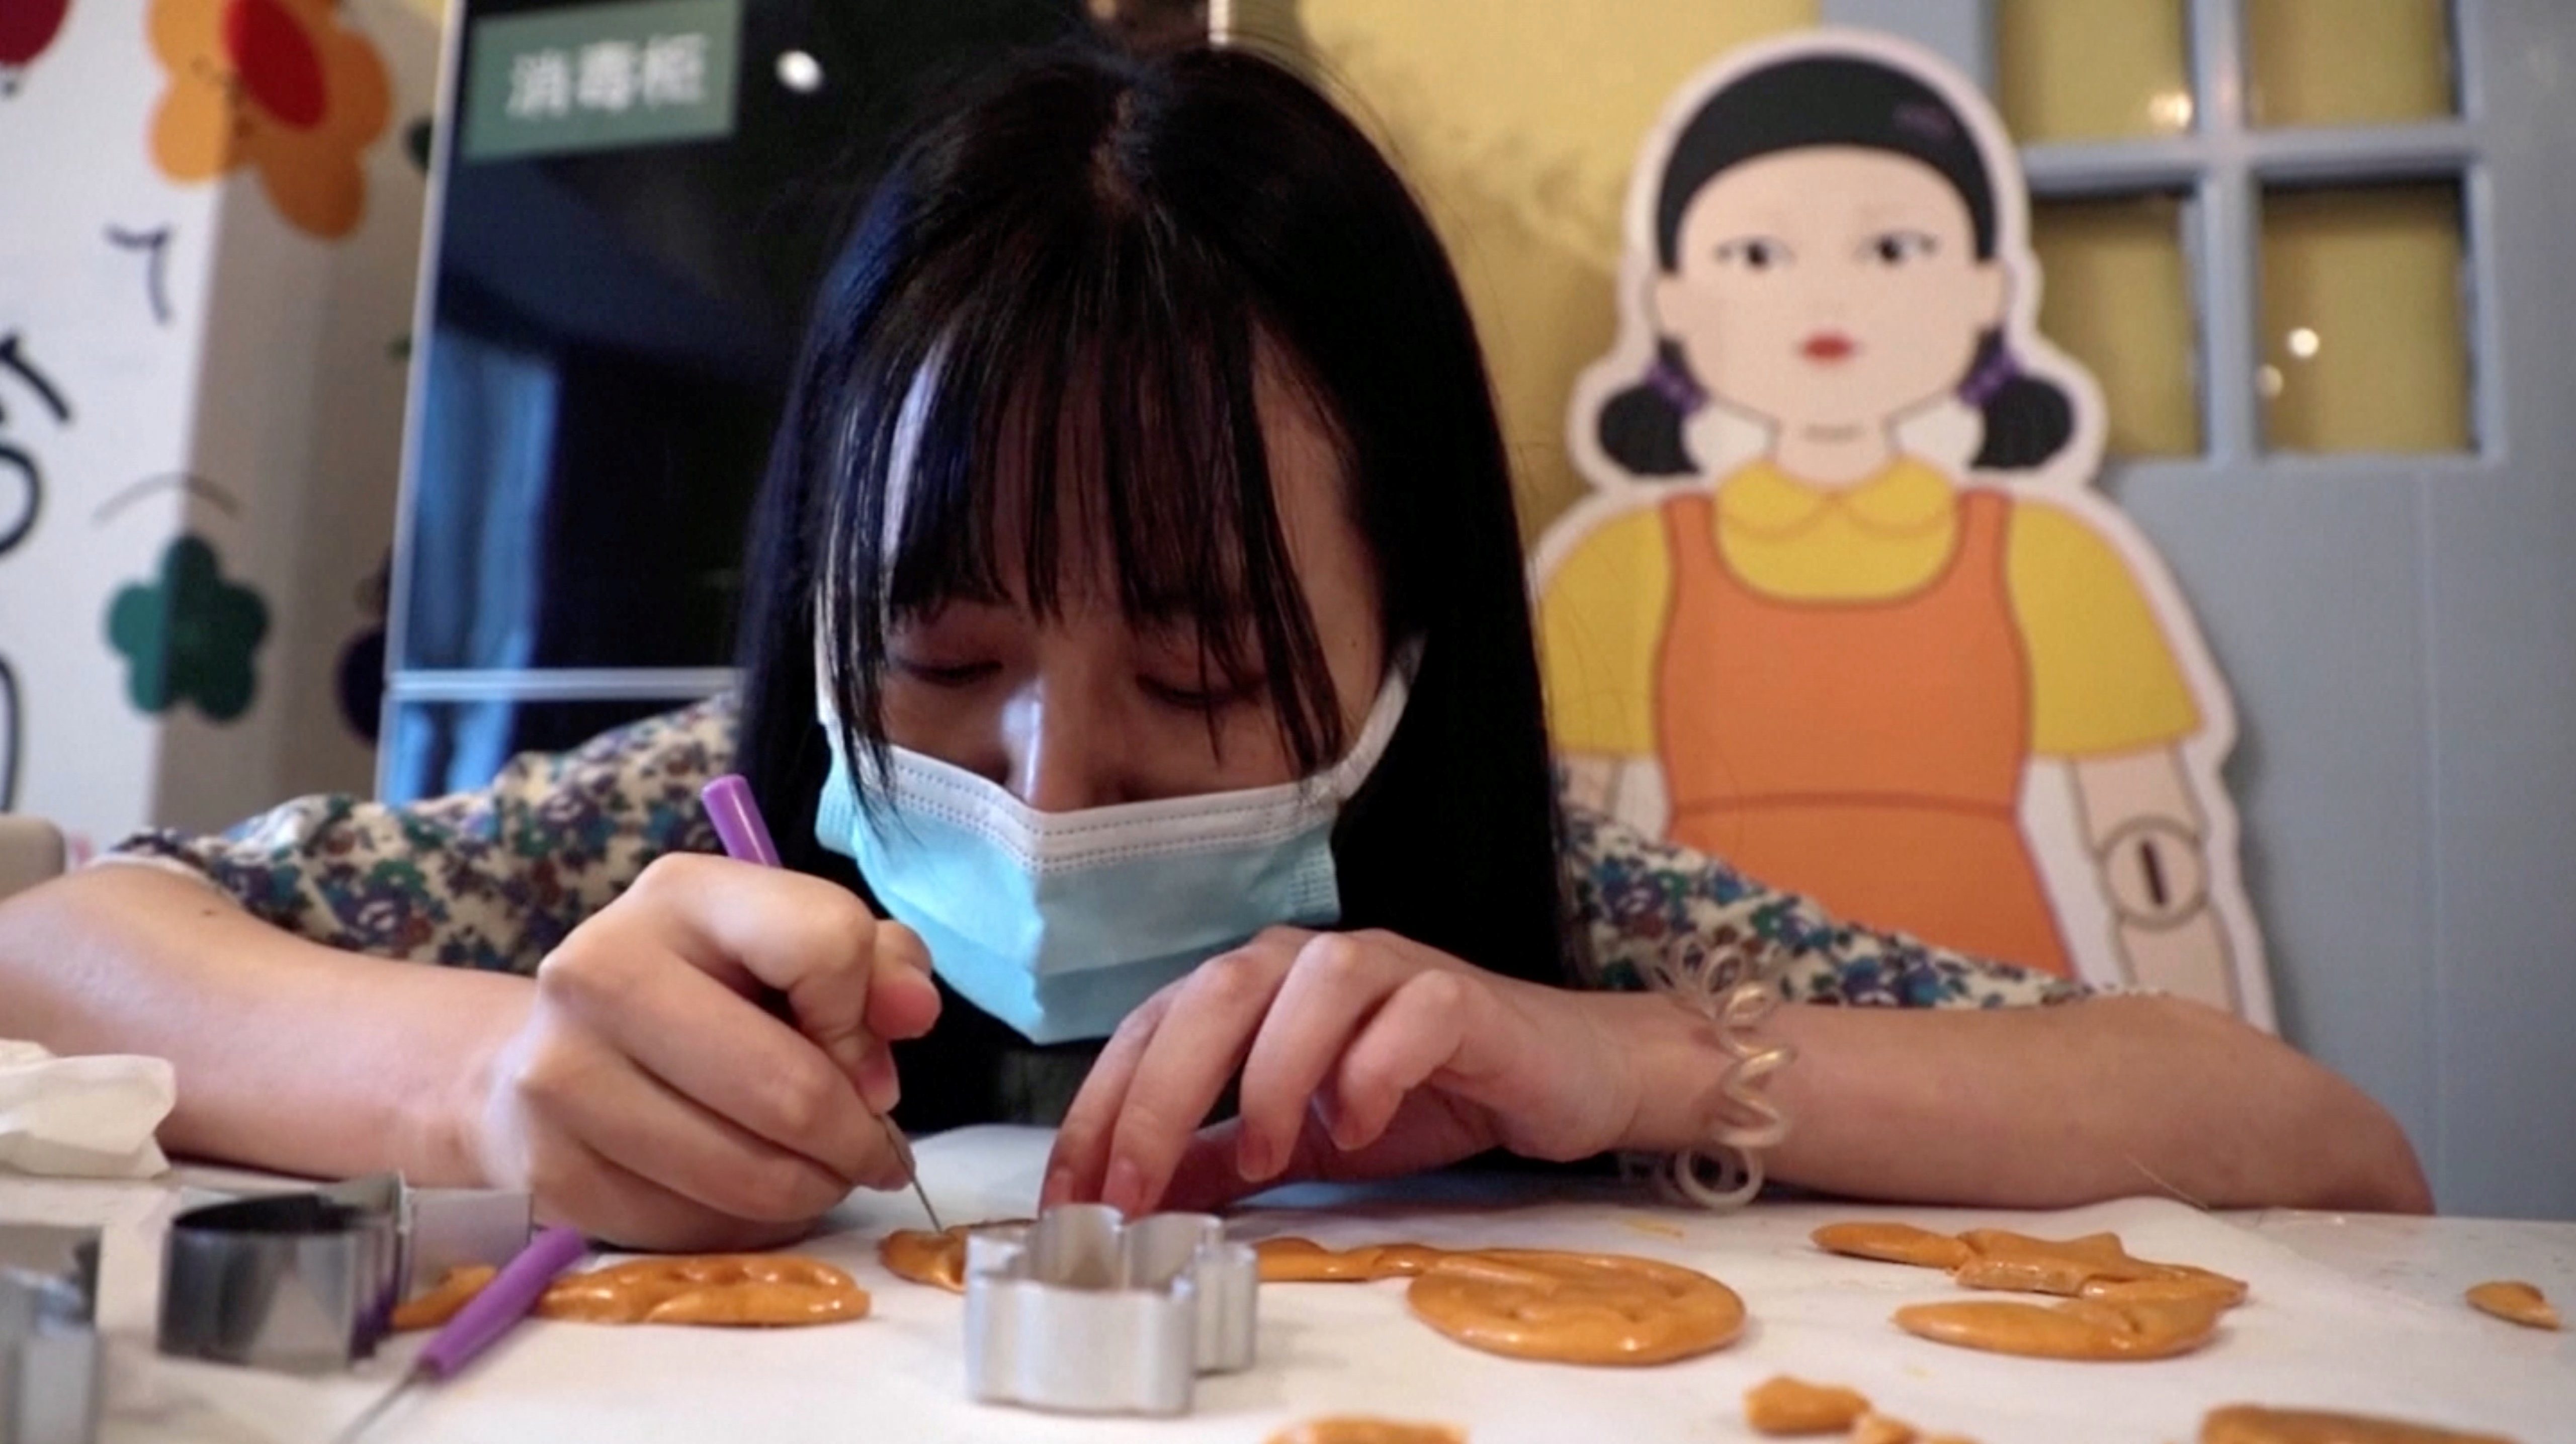 Beijing shop launches ‘Squid Game’ bake-off challenge